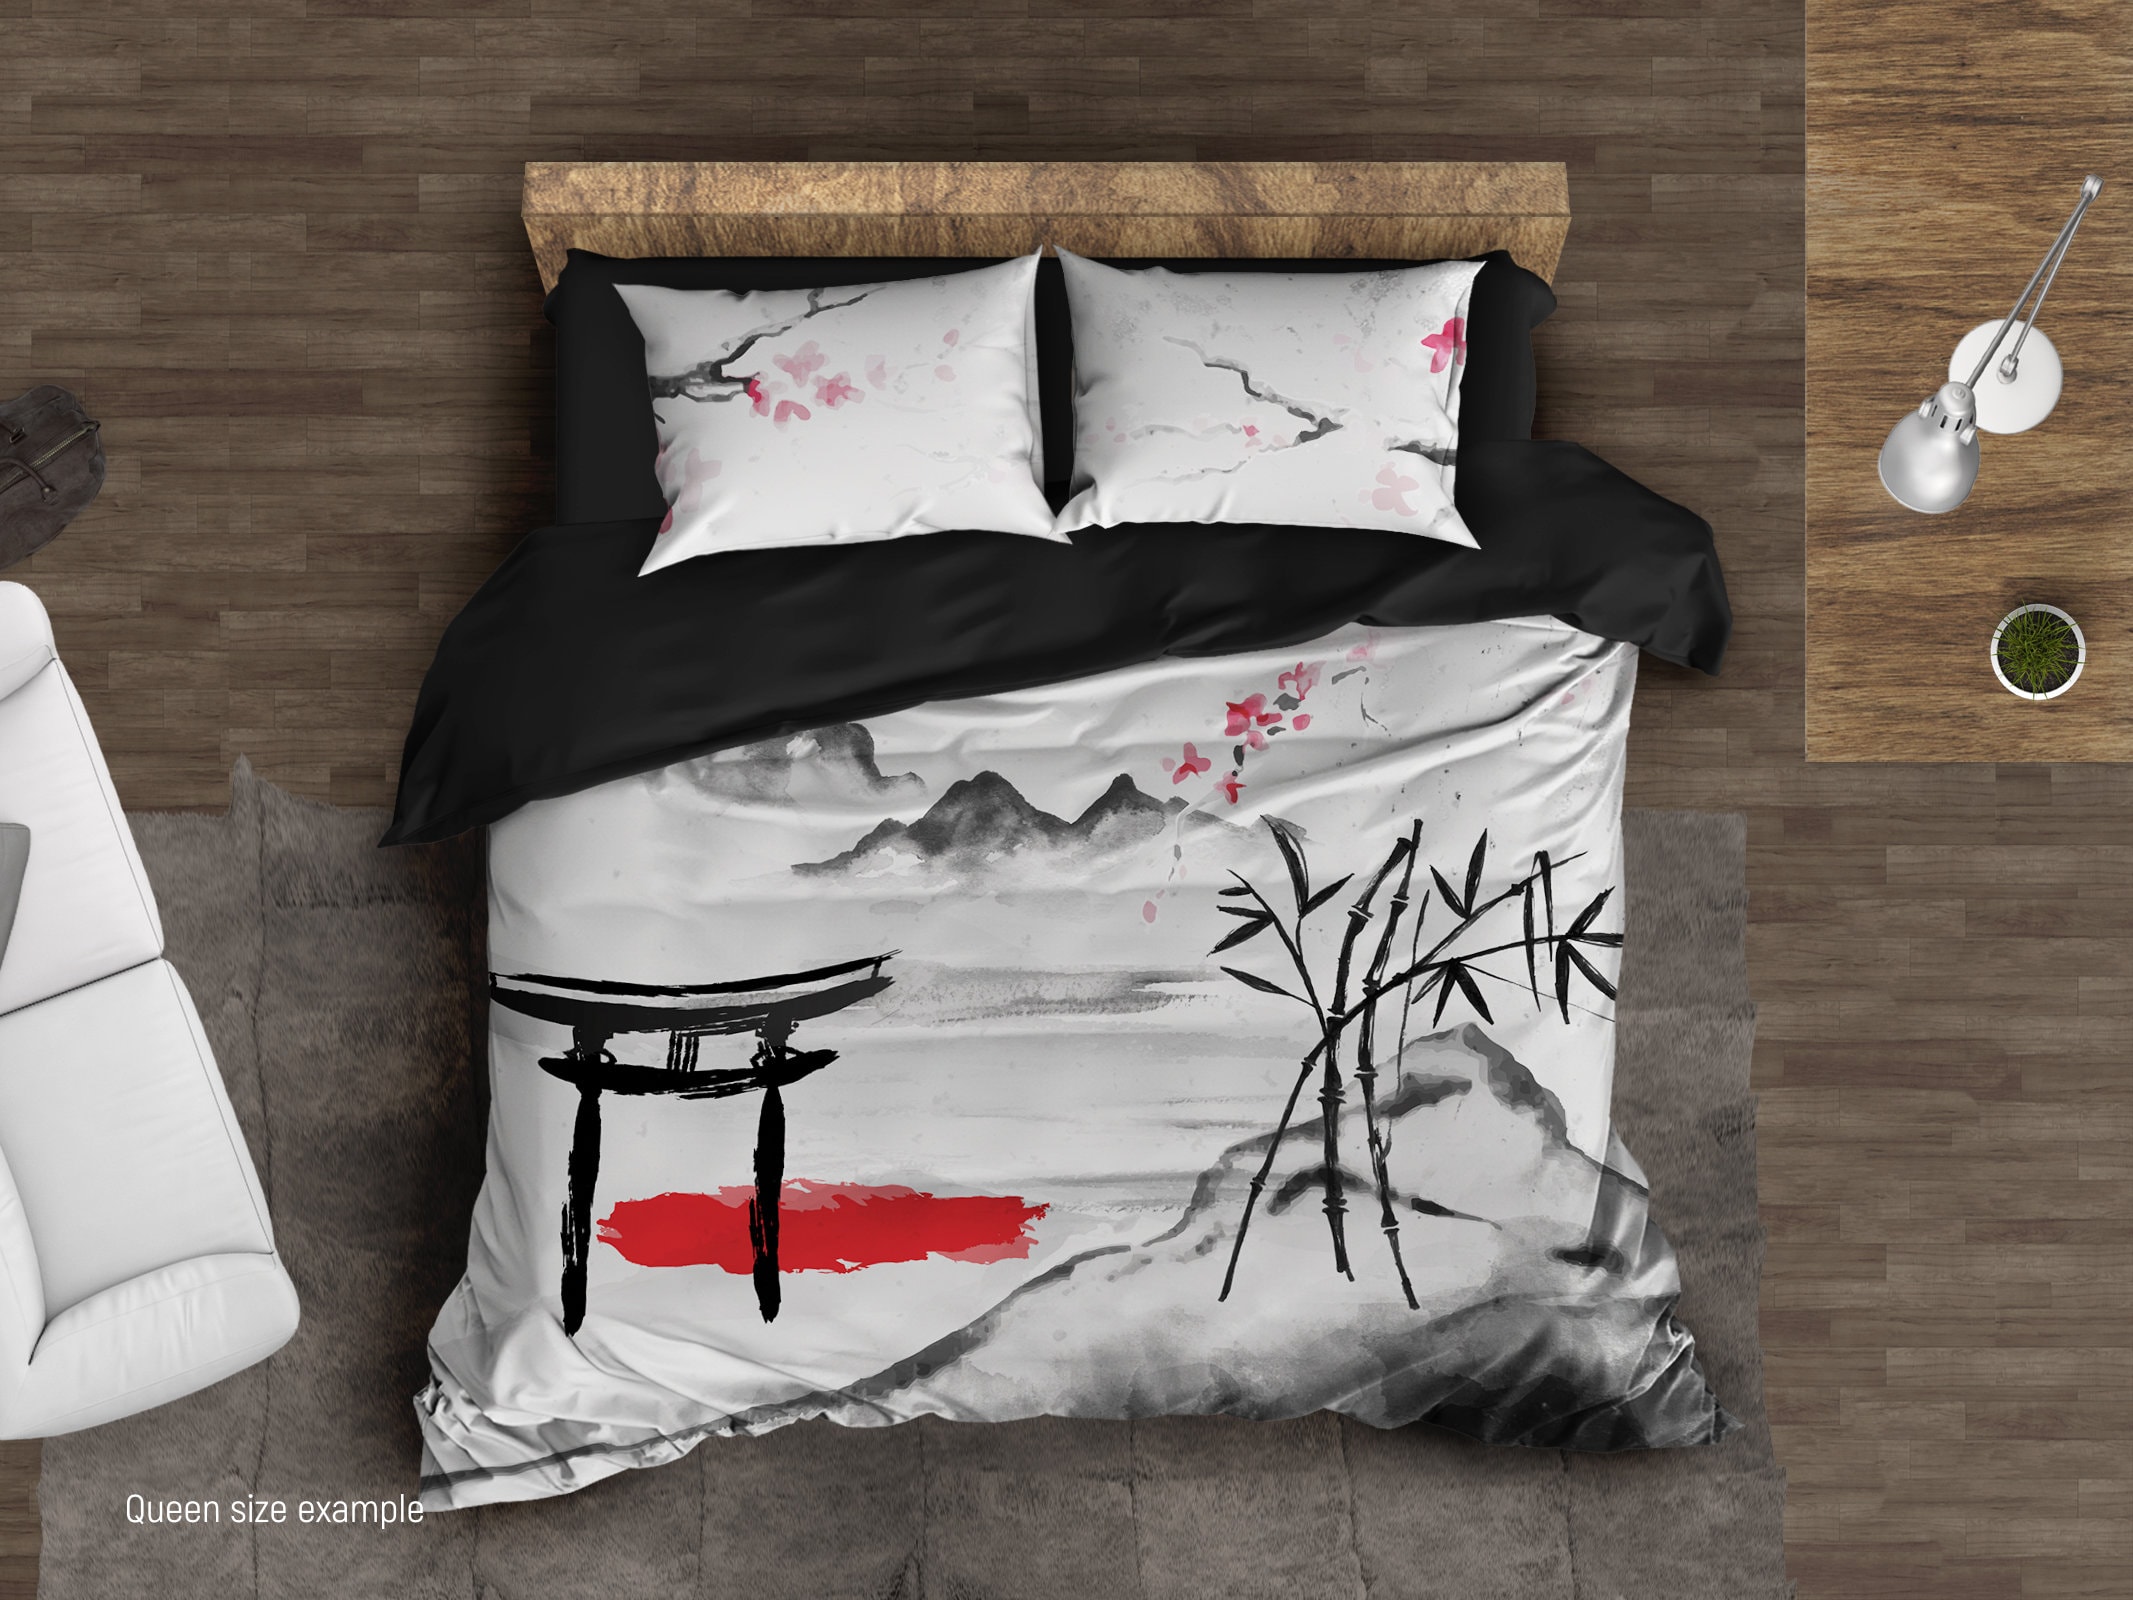 Asian Inspired Bedroom Decor Japanese Floral Print Decorative Pillow Sakura Accent Pillow Case Cherry Blossoms Print Pillow Sham Cover